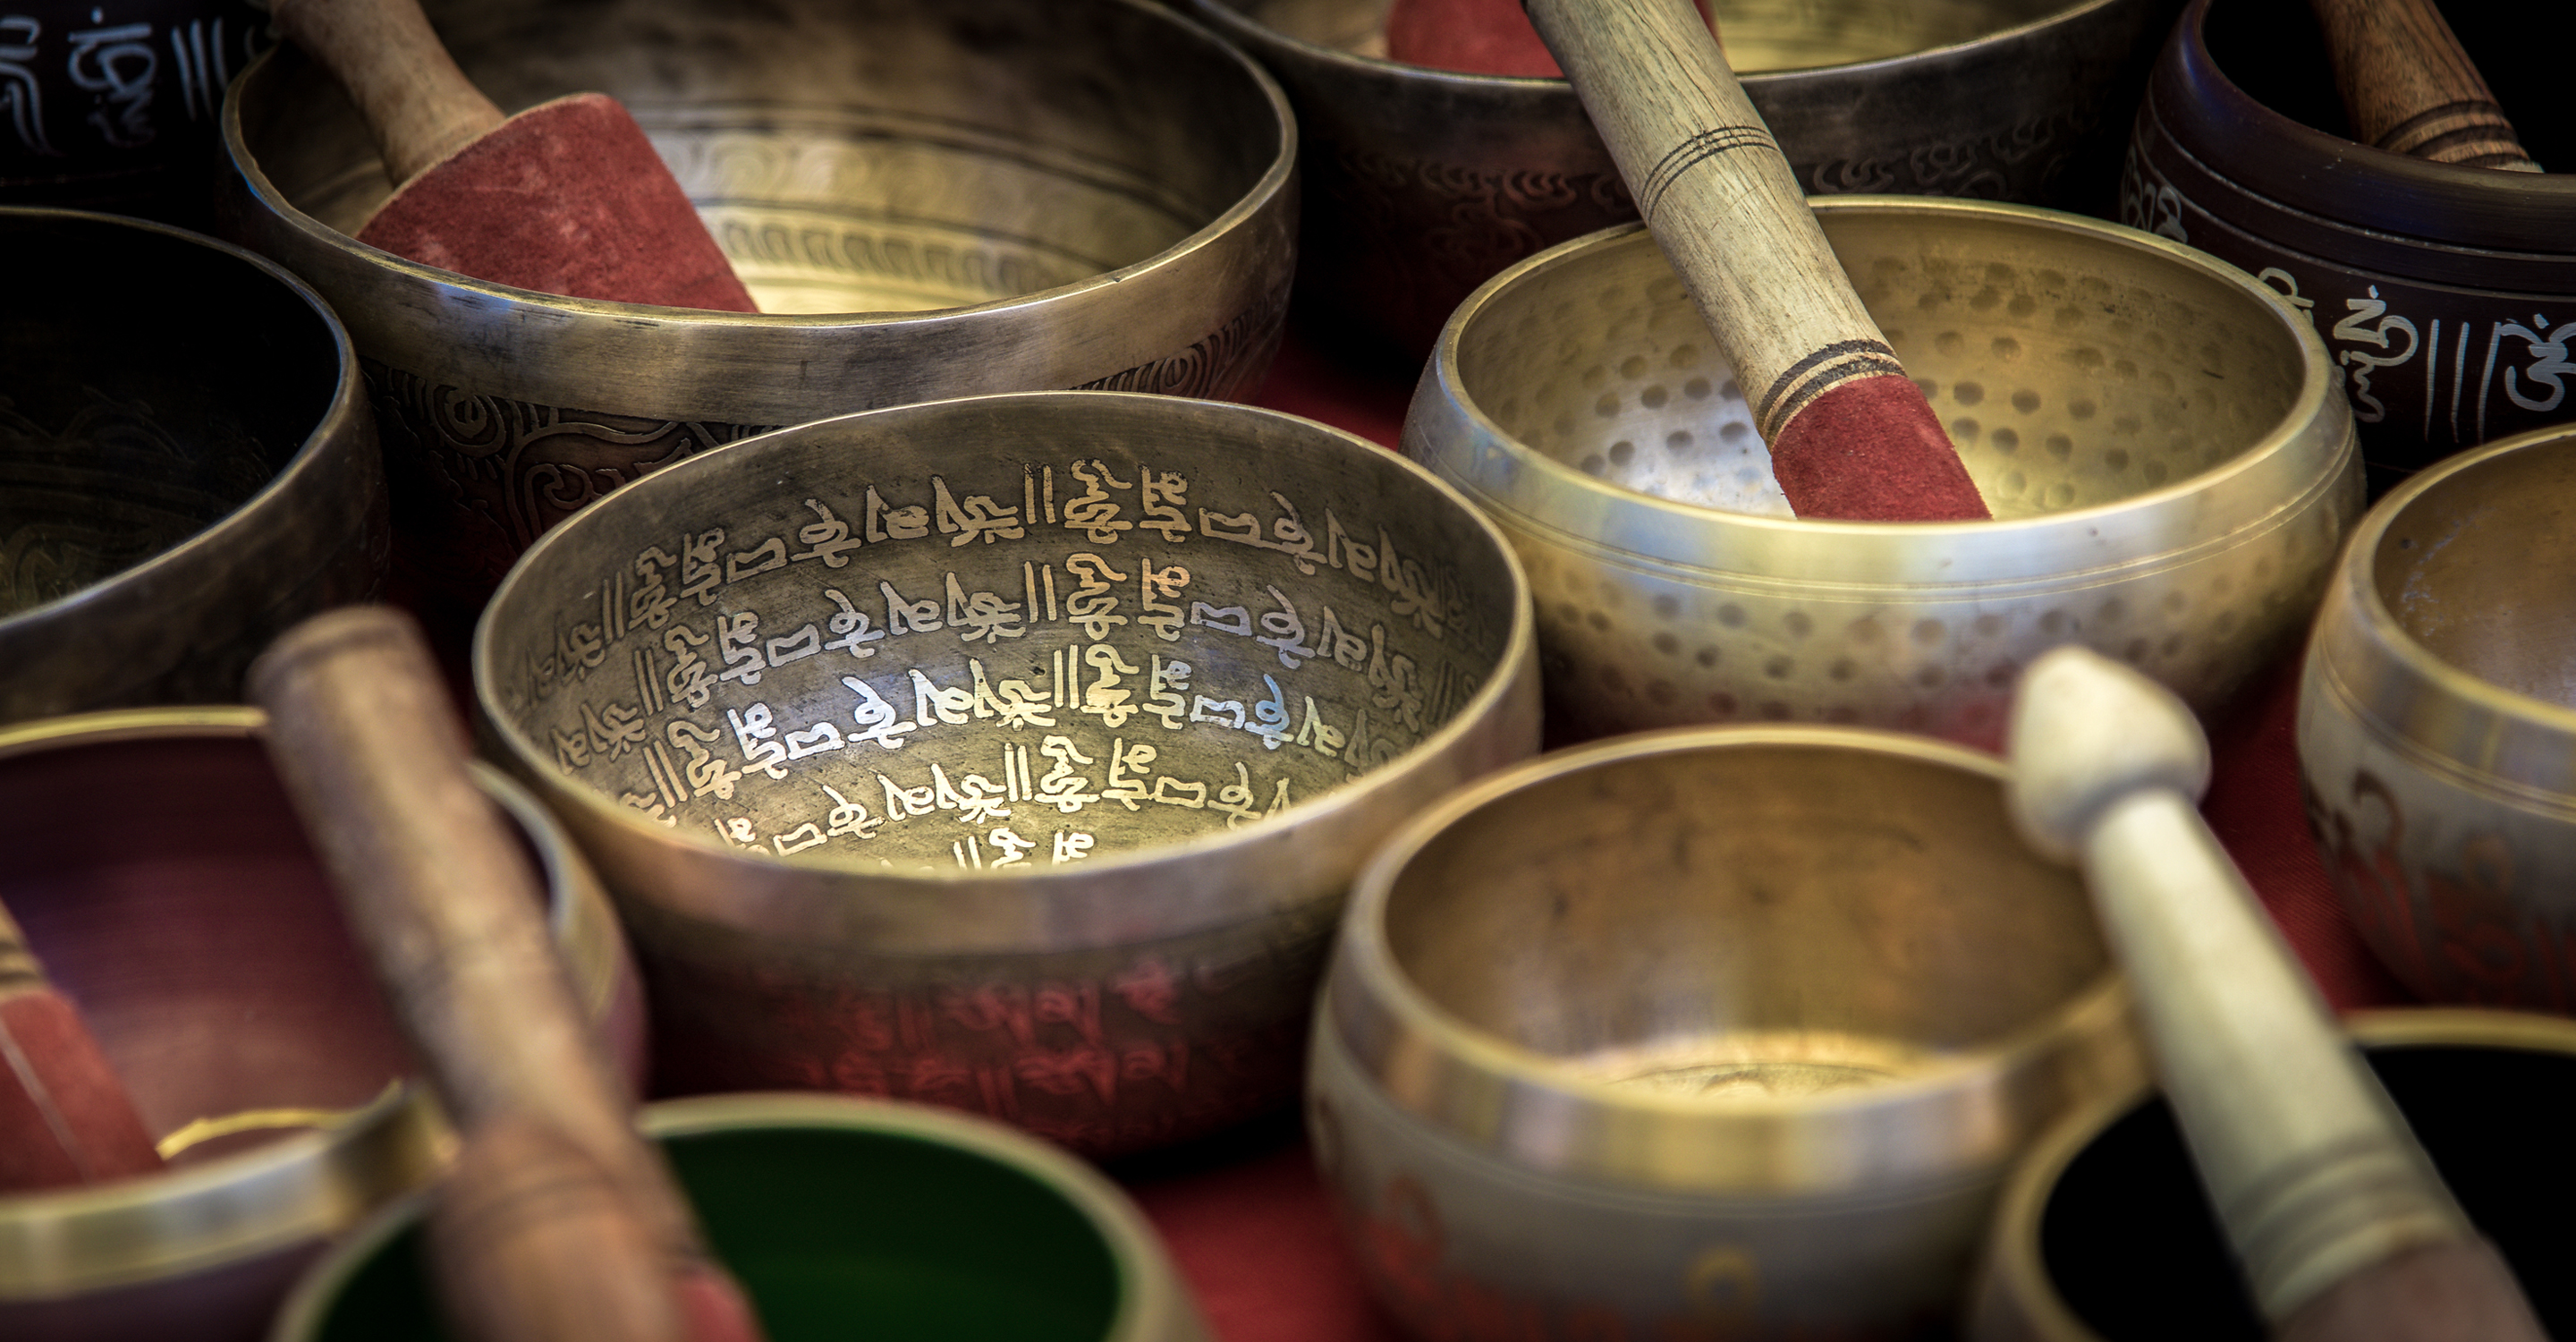 Prayer bowls of the Alchi Monastery in Alchi village in the Leh District, India